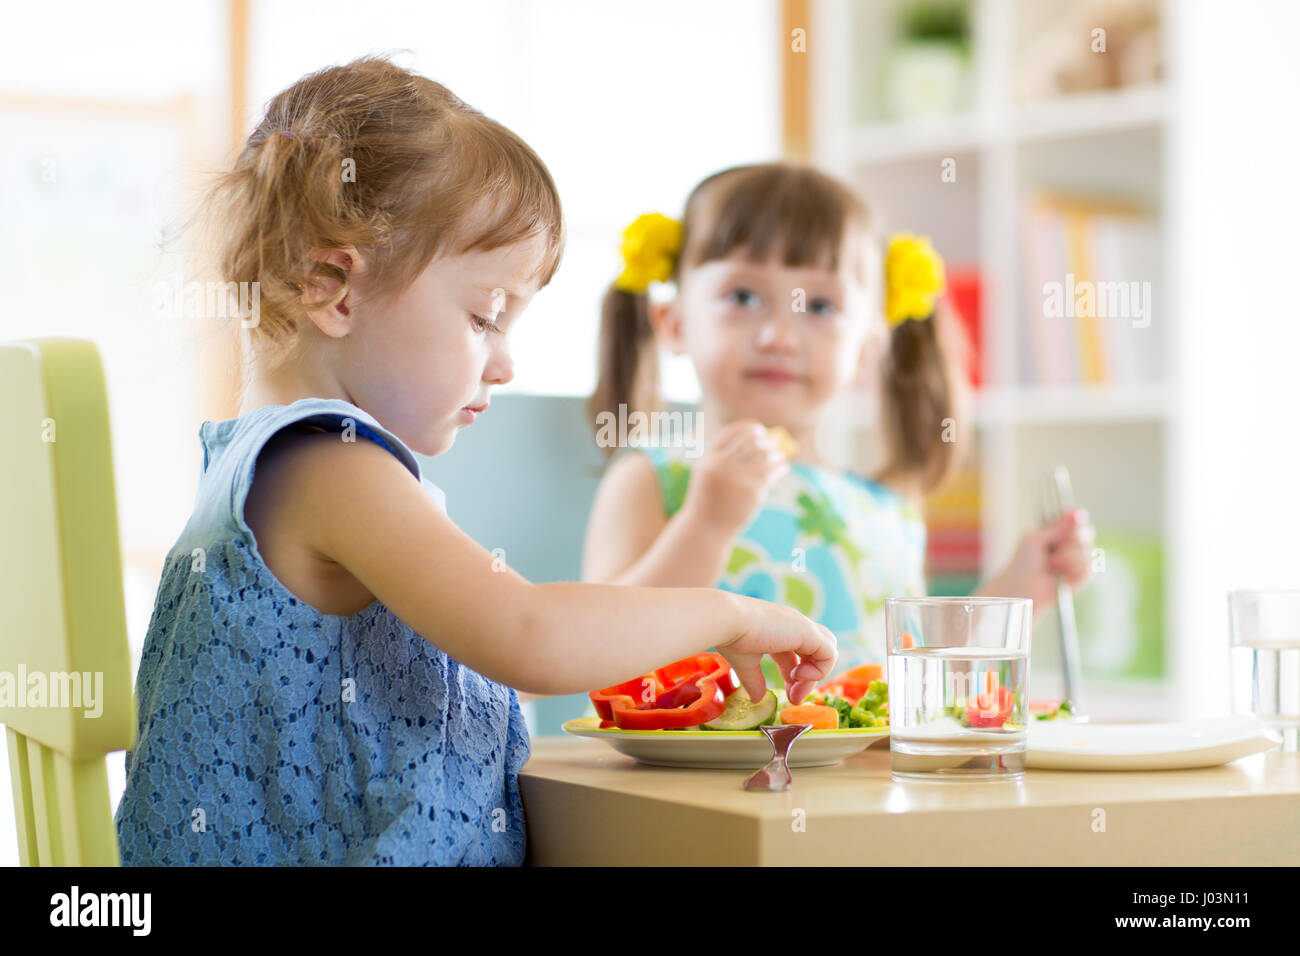 Bambini I bambini di mangiare le verdure a scuola o a casa Foto Stock